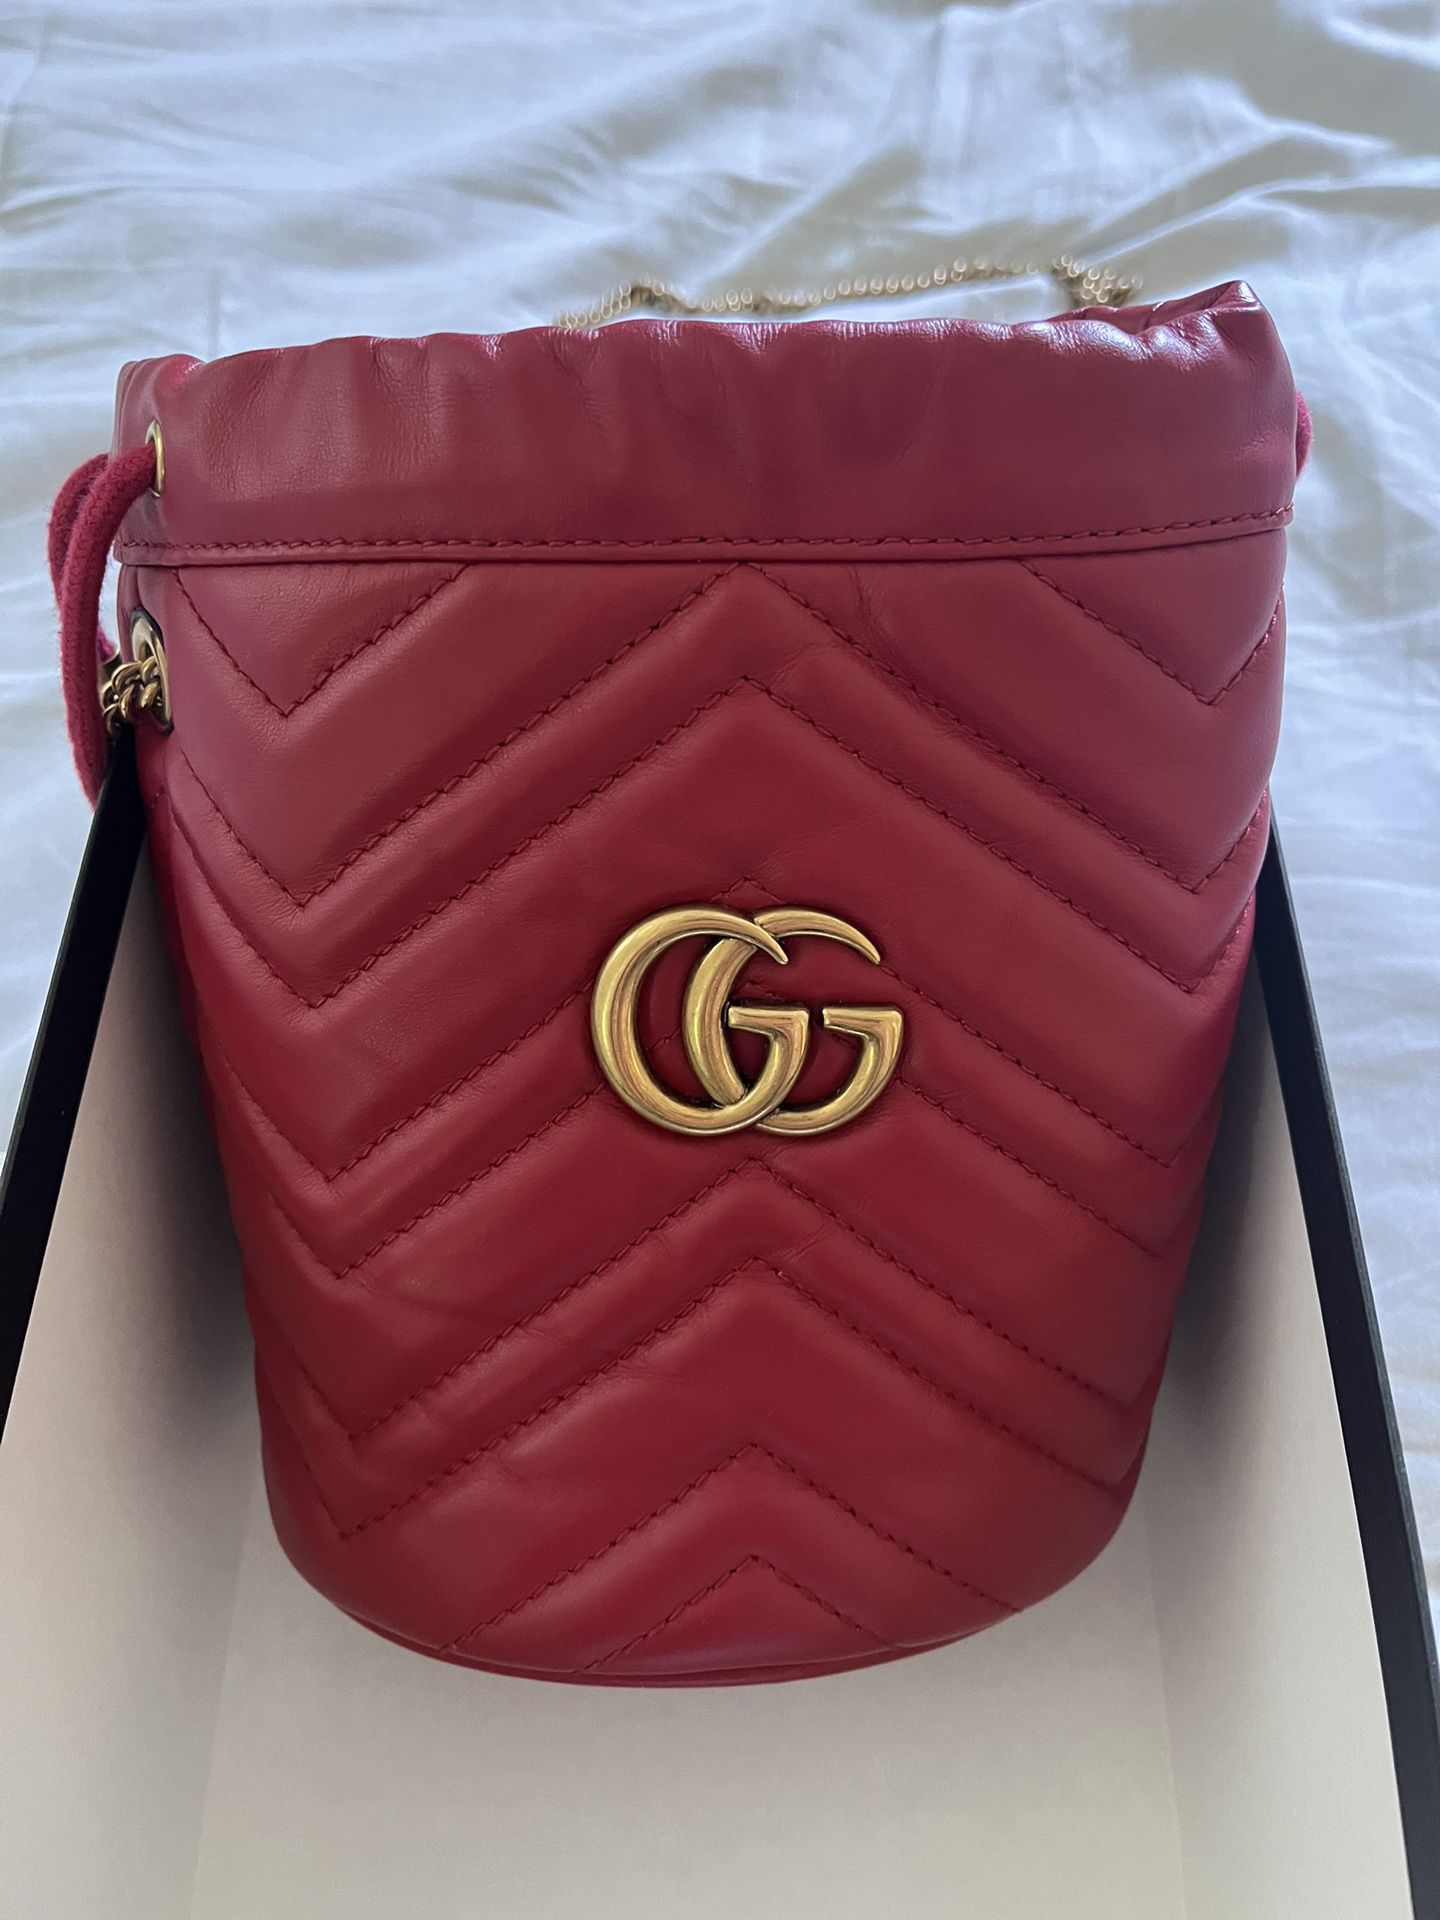 Excellent Condition Gucci Bag